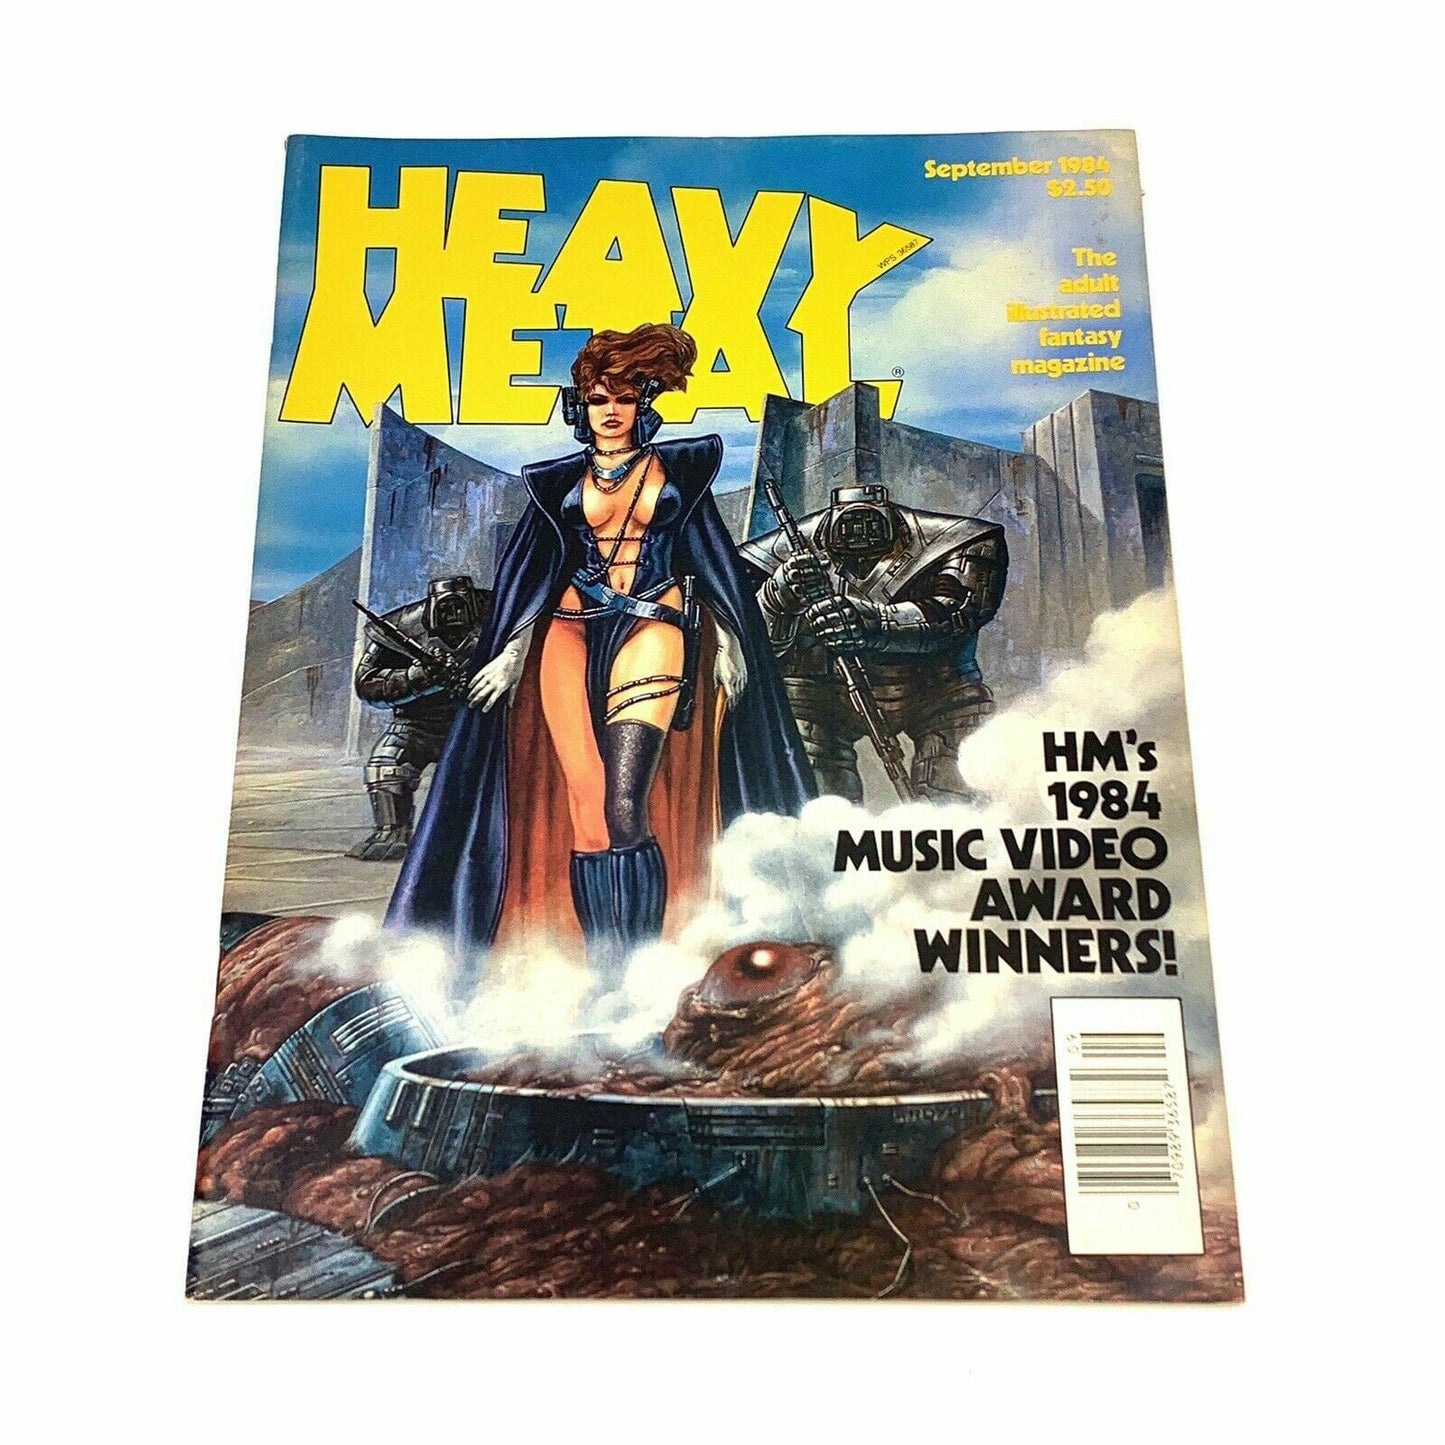 HEAVY METAL - Adult Illustrative Fantasy Magazine - September 1984 - parsimonyshoppes